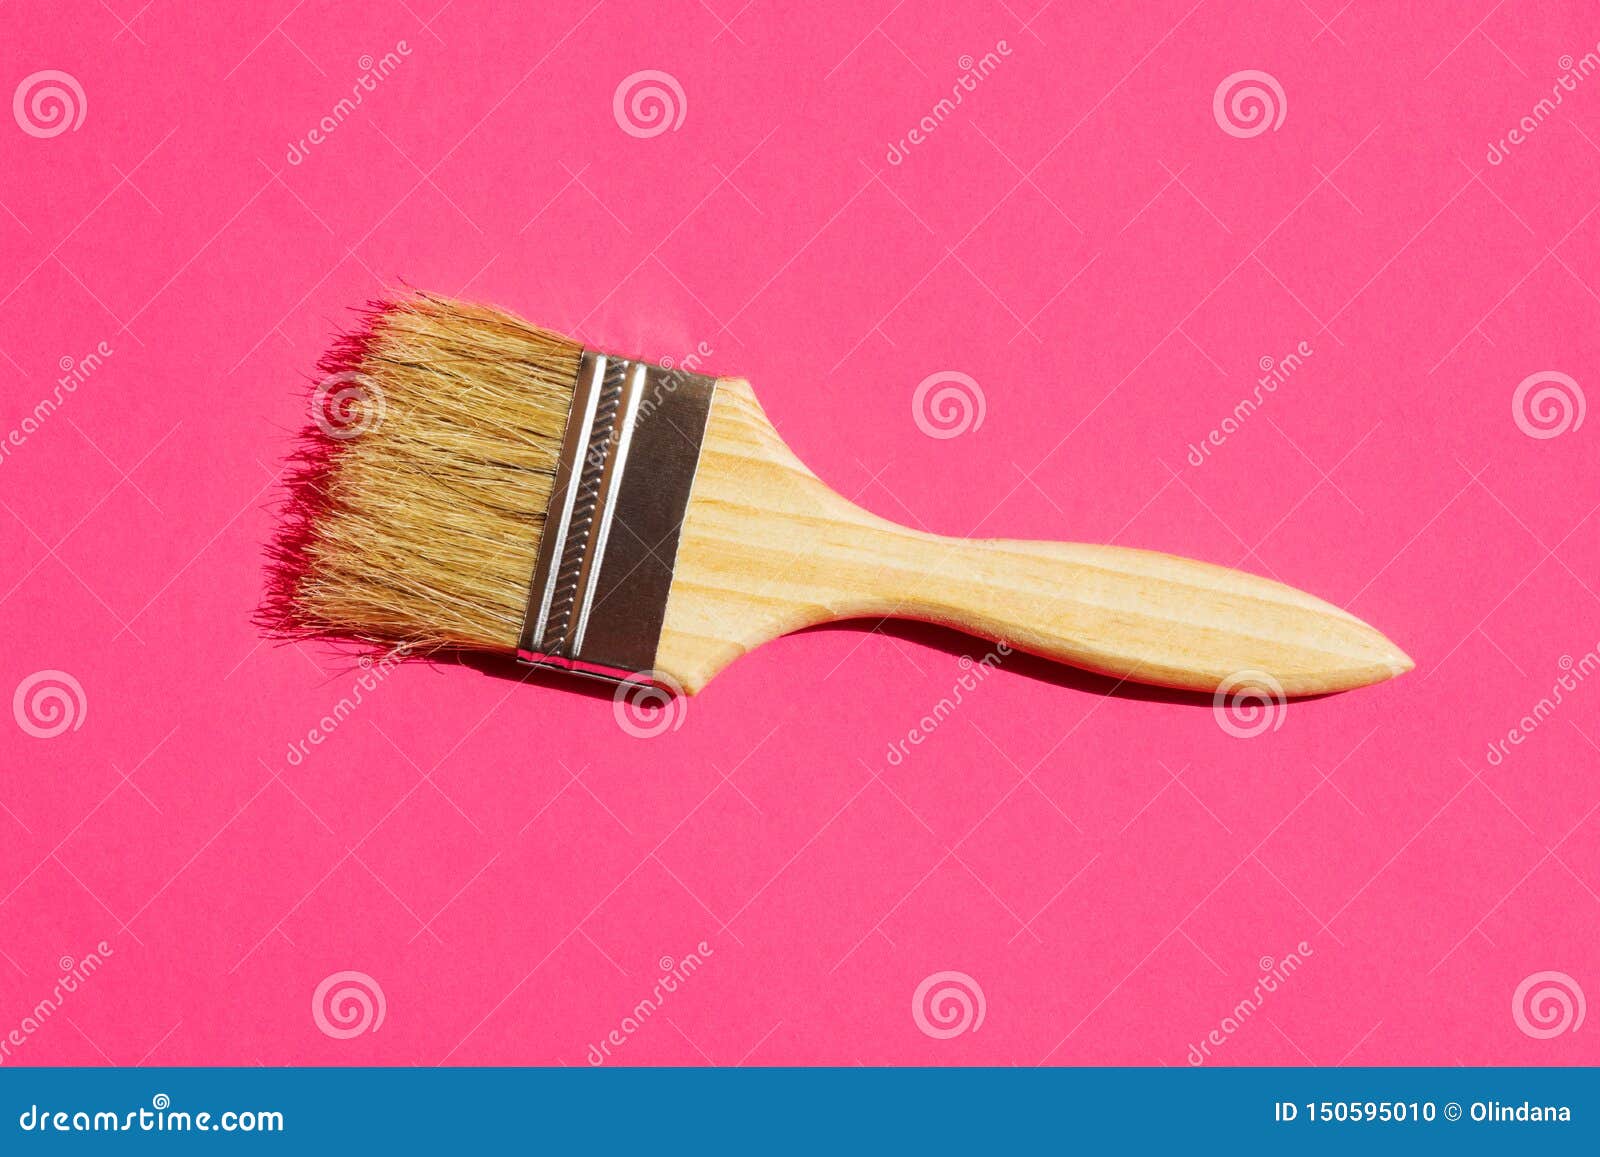 paint varnishing brush with wooden handle varnish on trendy fuchsia pink background. interior  home refurbishing fashion